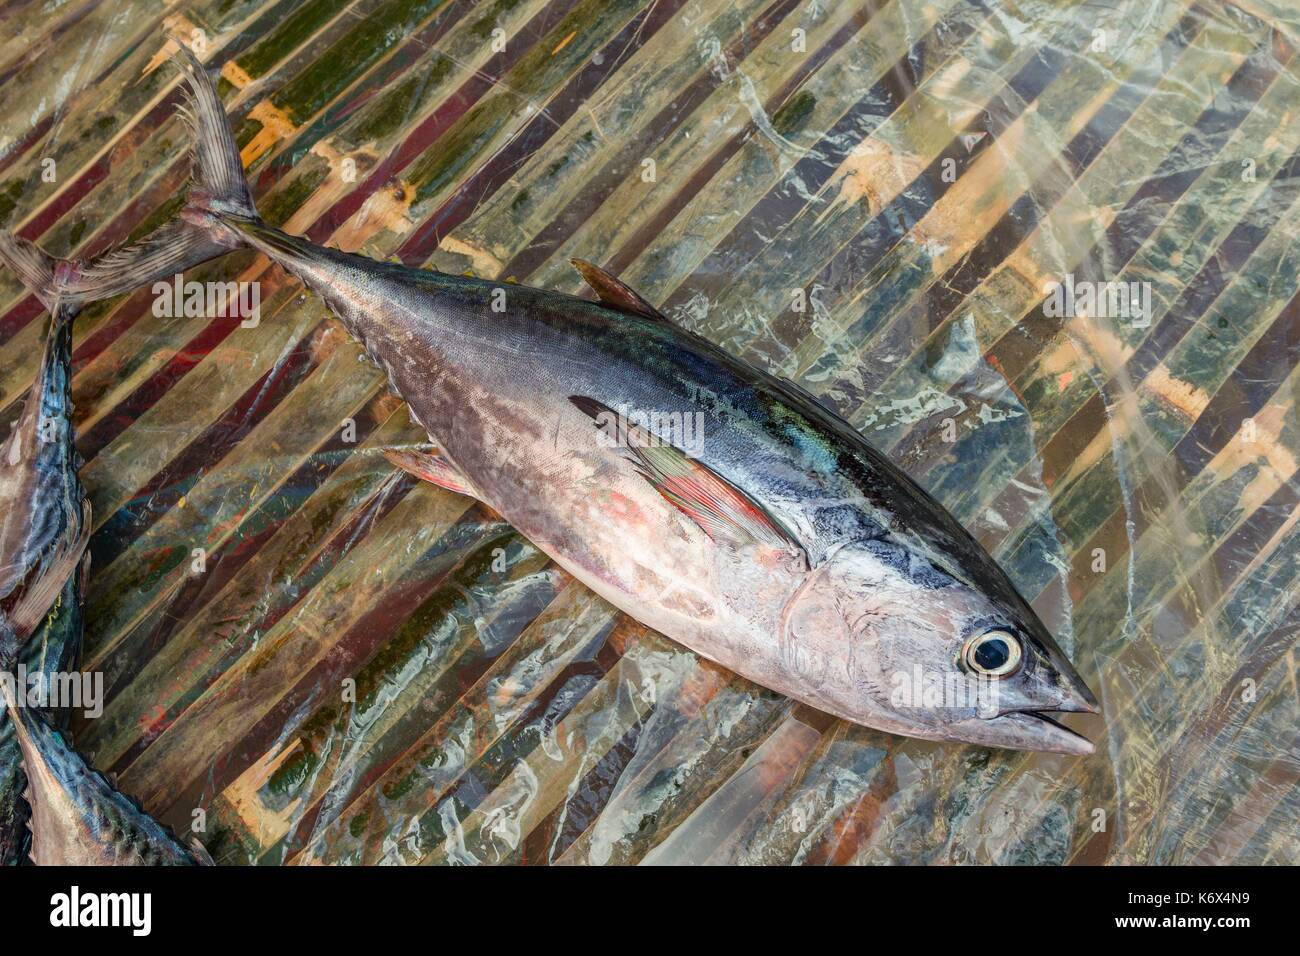 Philippines, Palawan, Aborlan, small yellowfin tuna (Thunnus albacares) Stock Photo